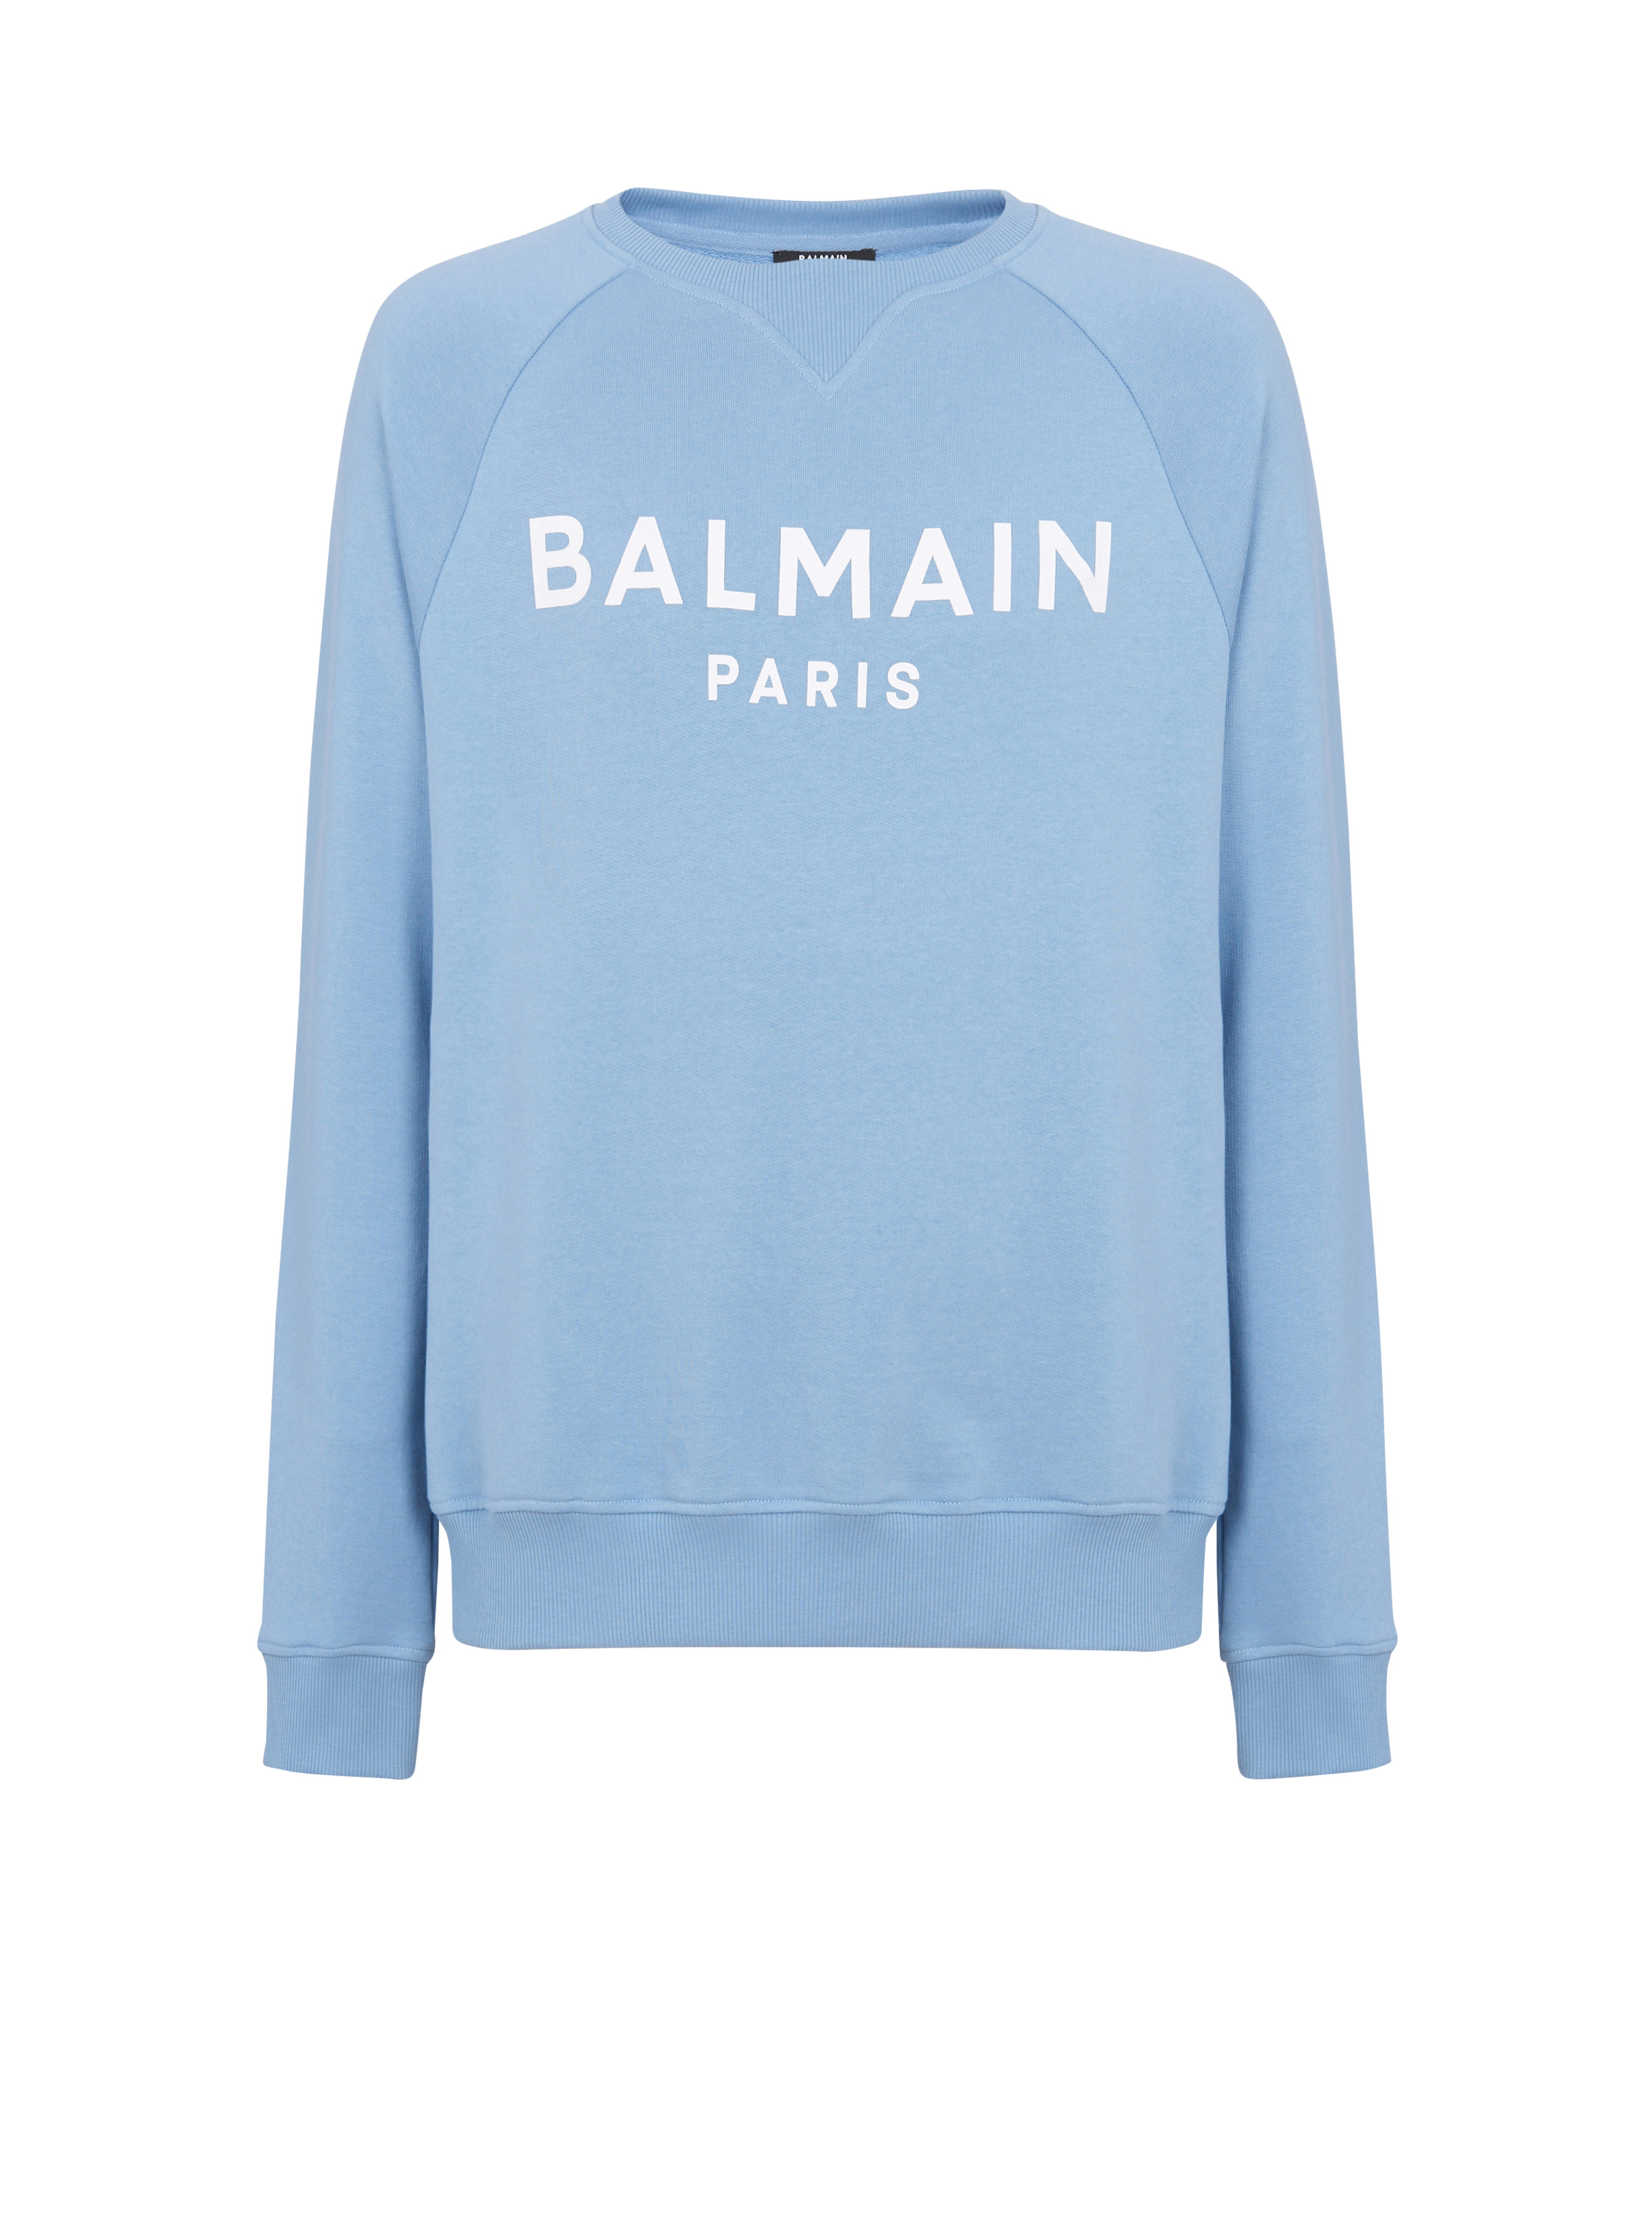 Balmain Paris sweatshirt - 1